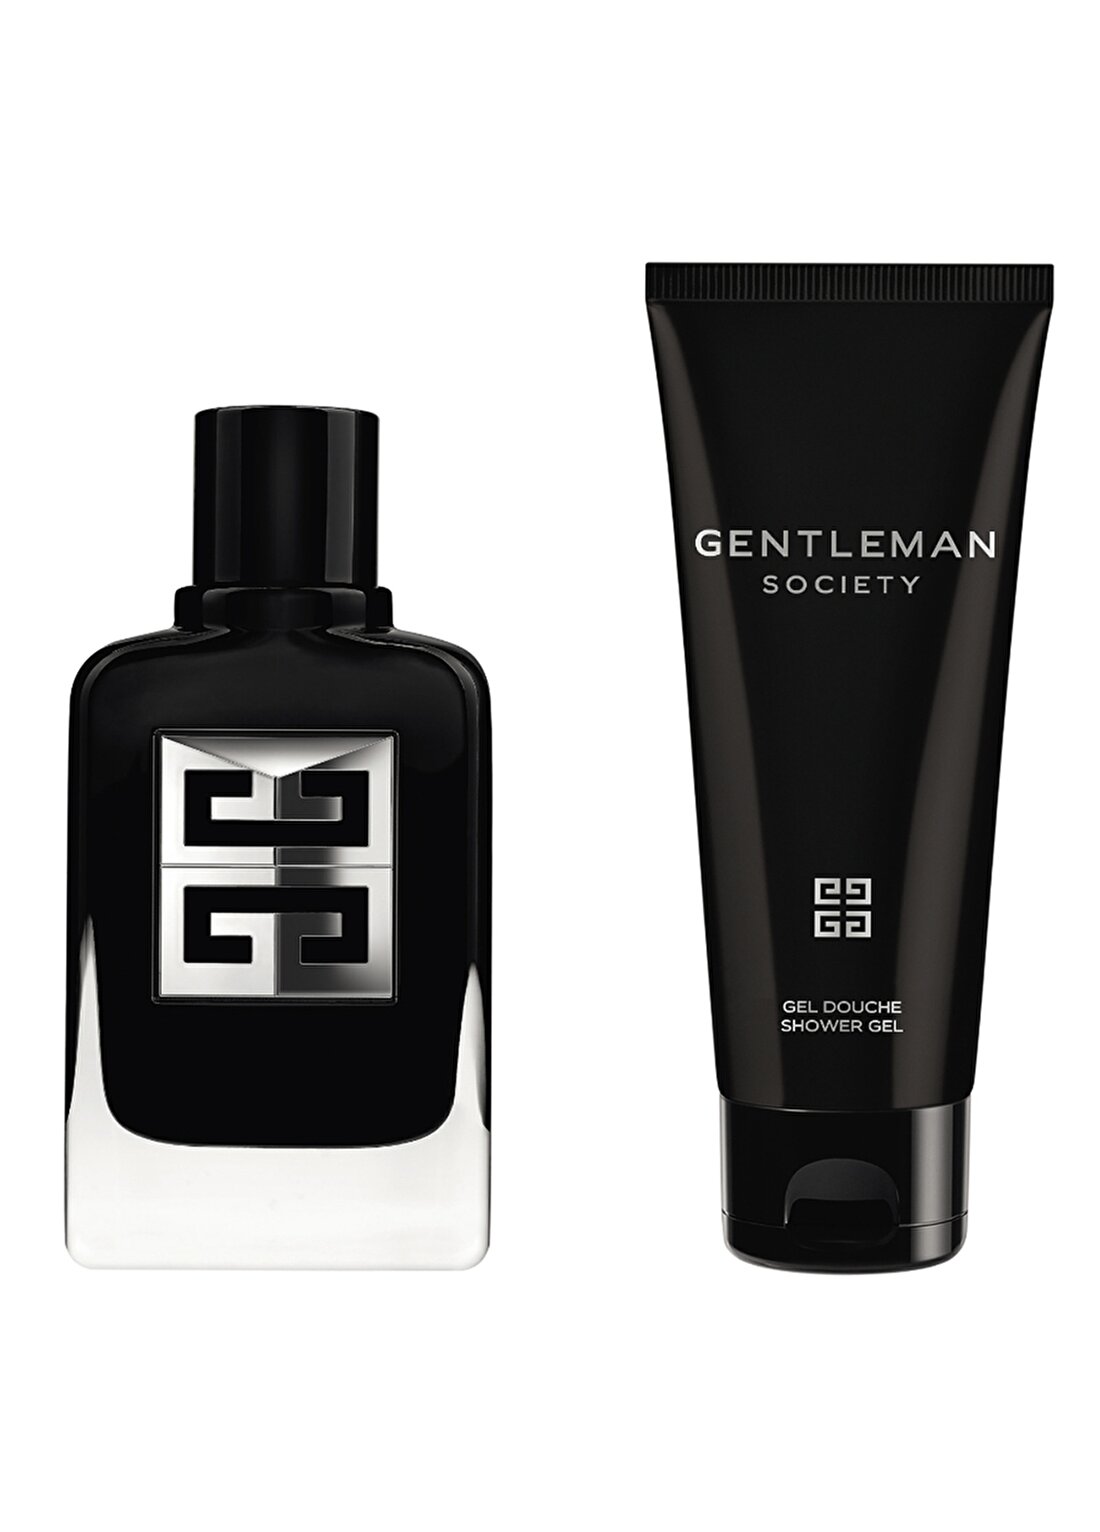 Givenchy Gentleman Society Edp 60 Ml+Shower Gel 75 Ml Parfüm Set